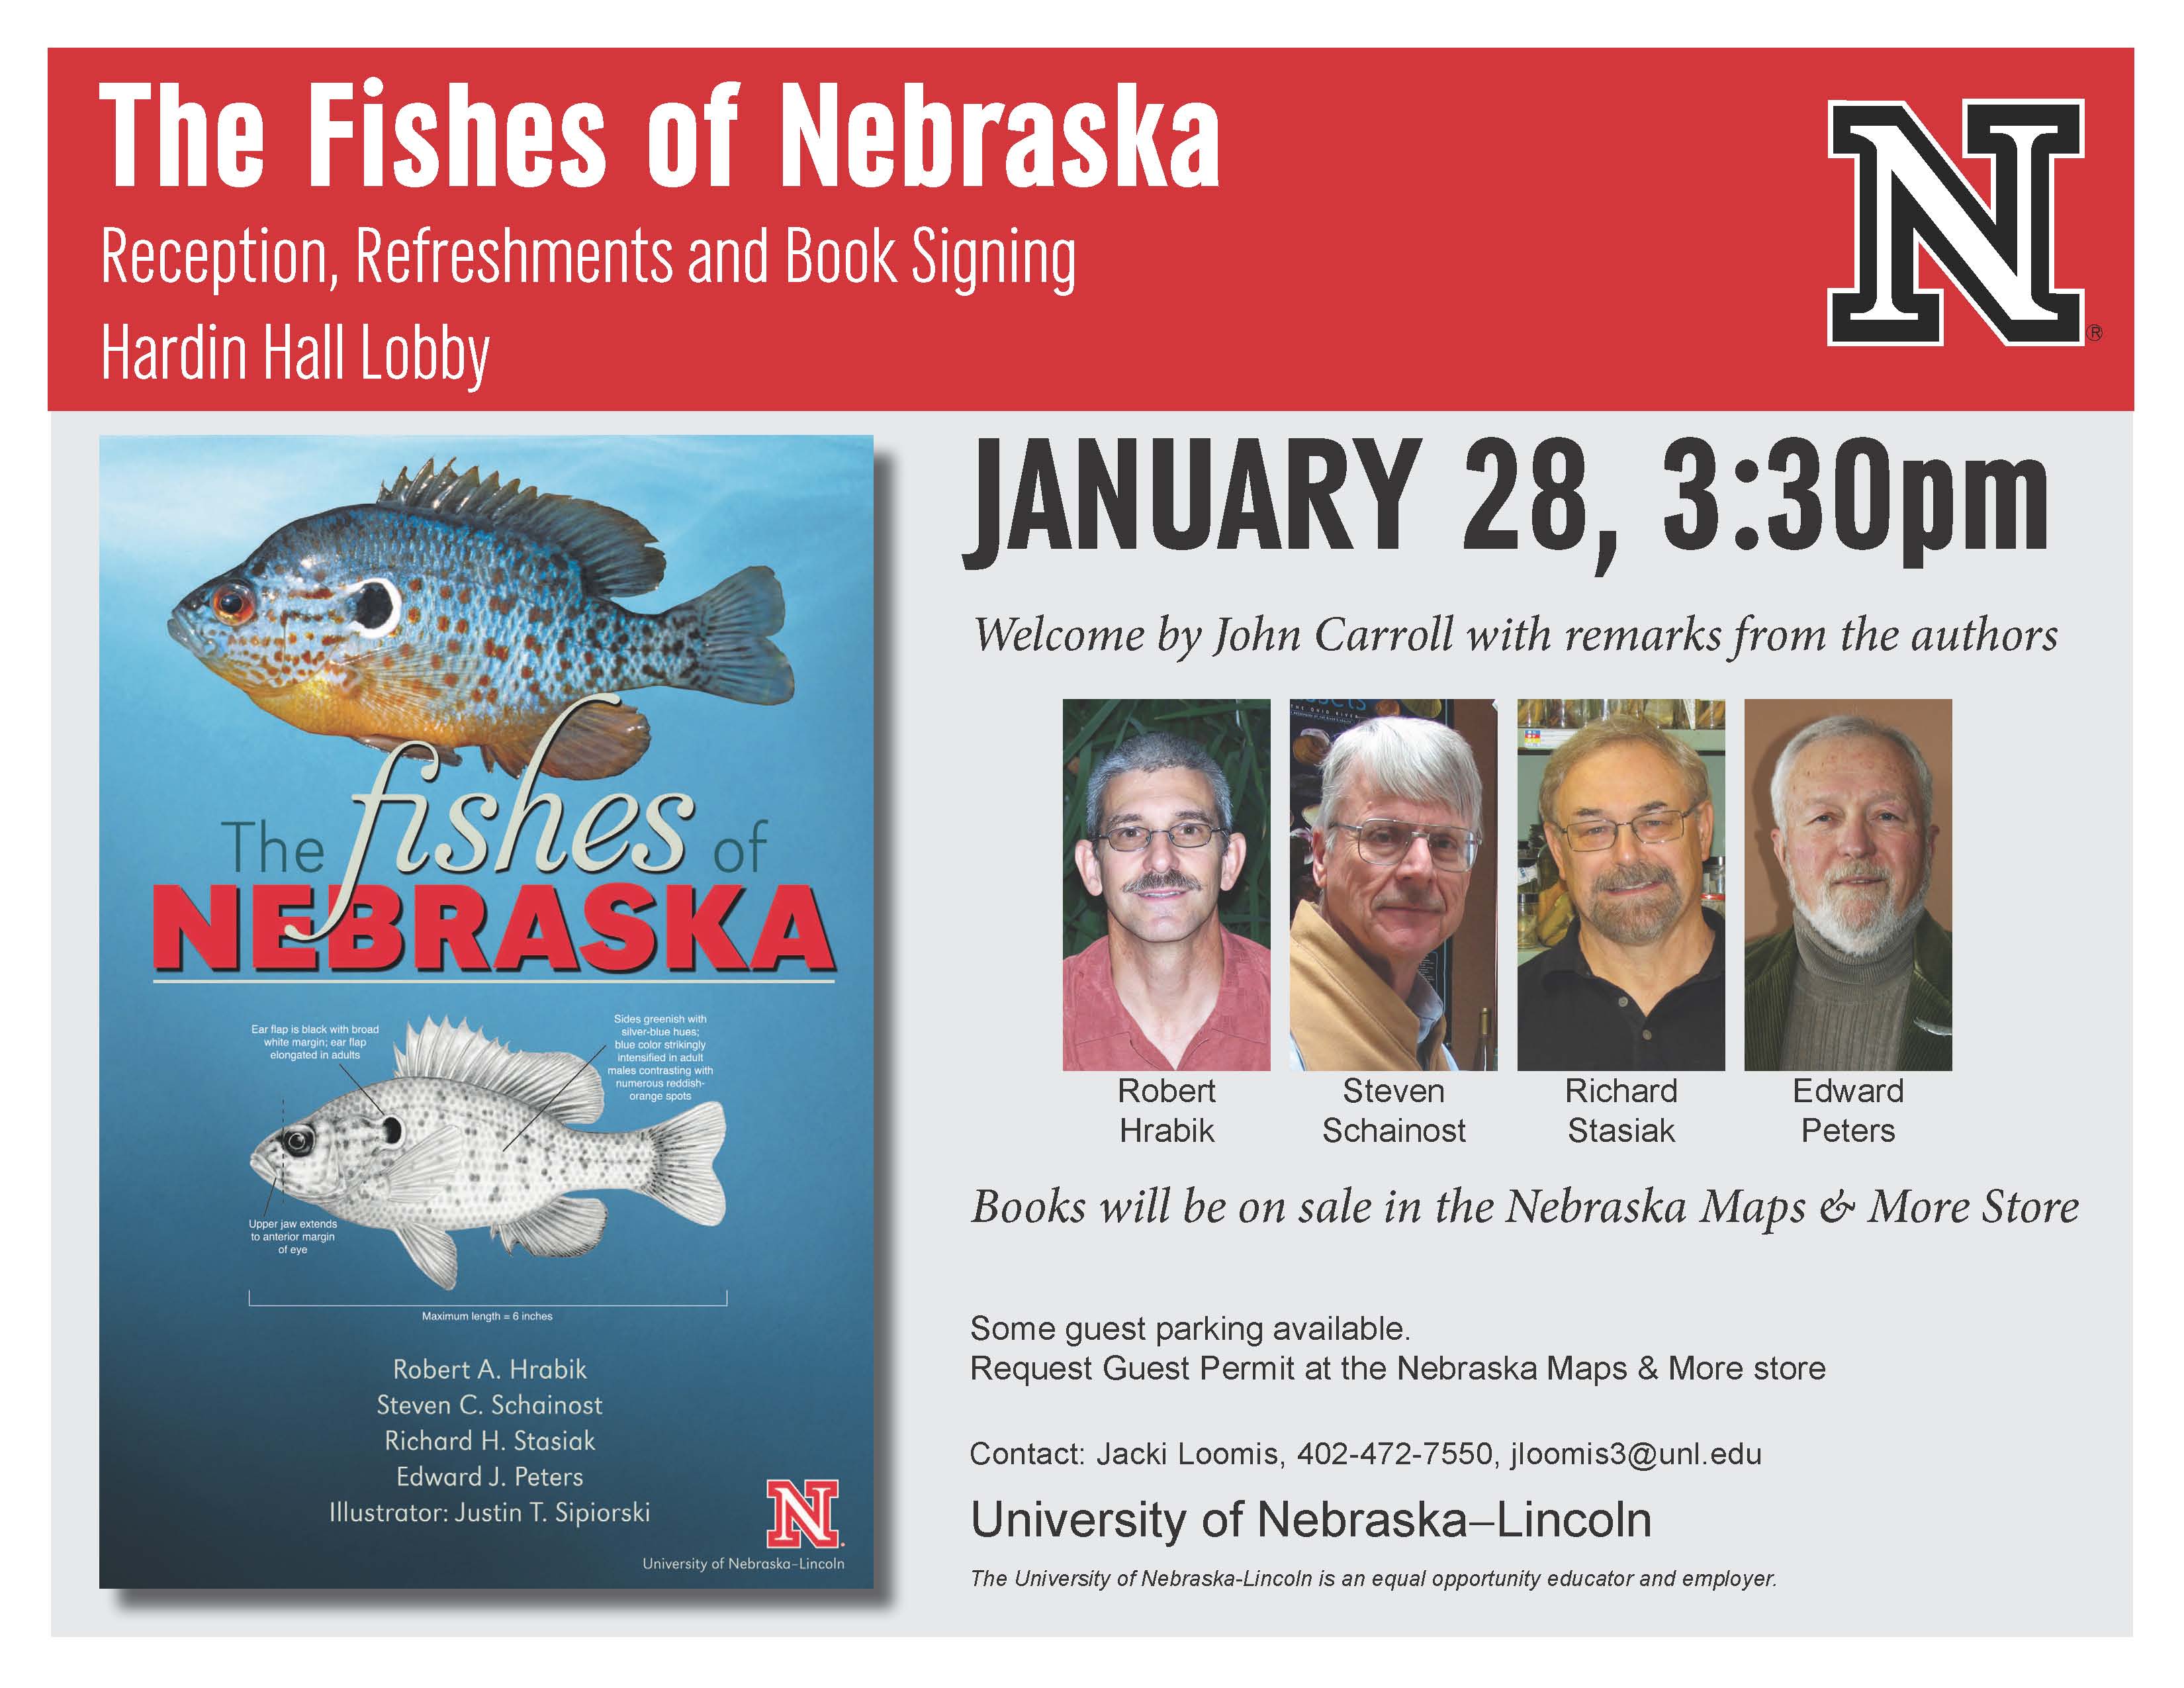 The Fishes of Nebraska Authors